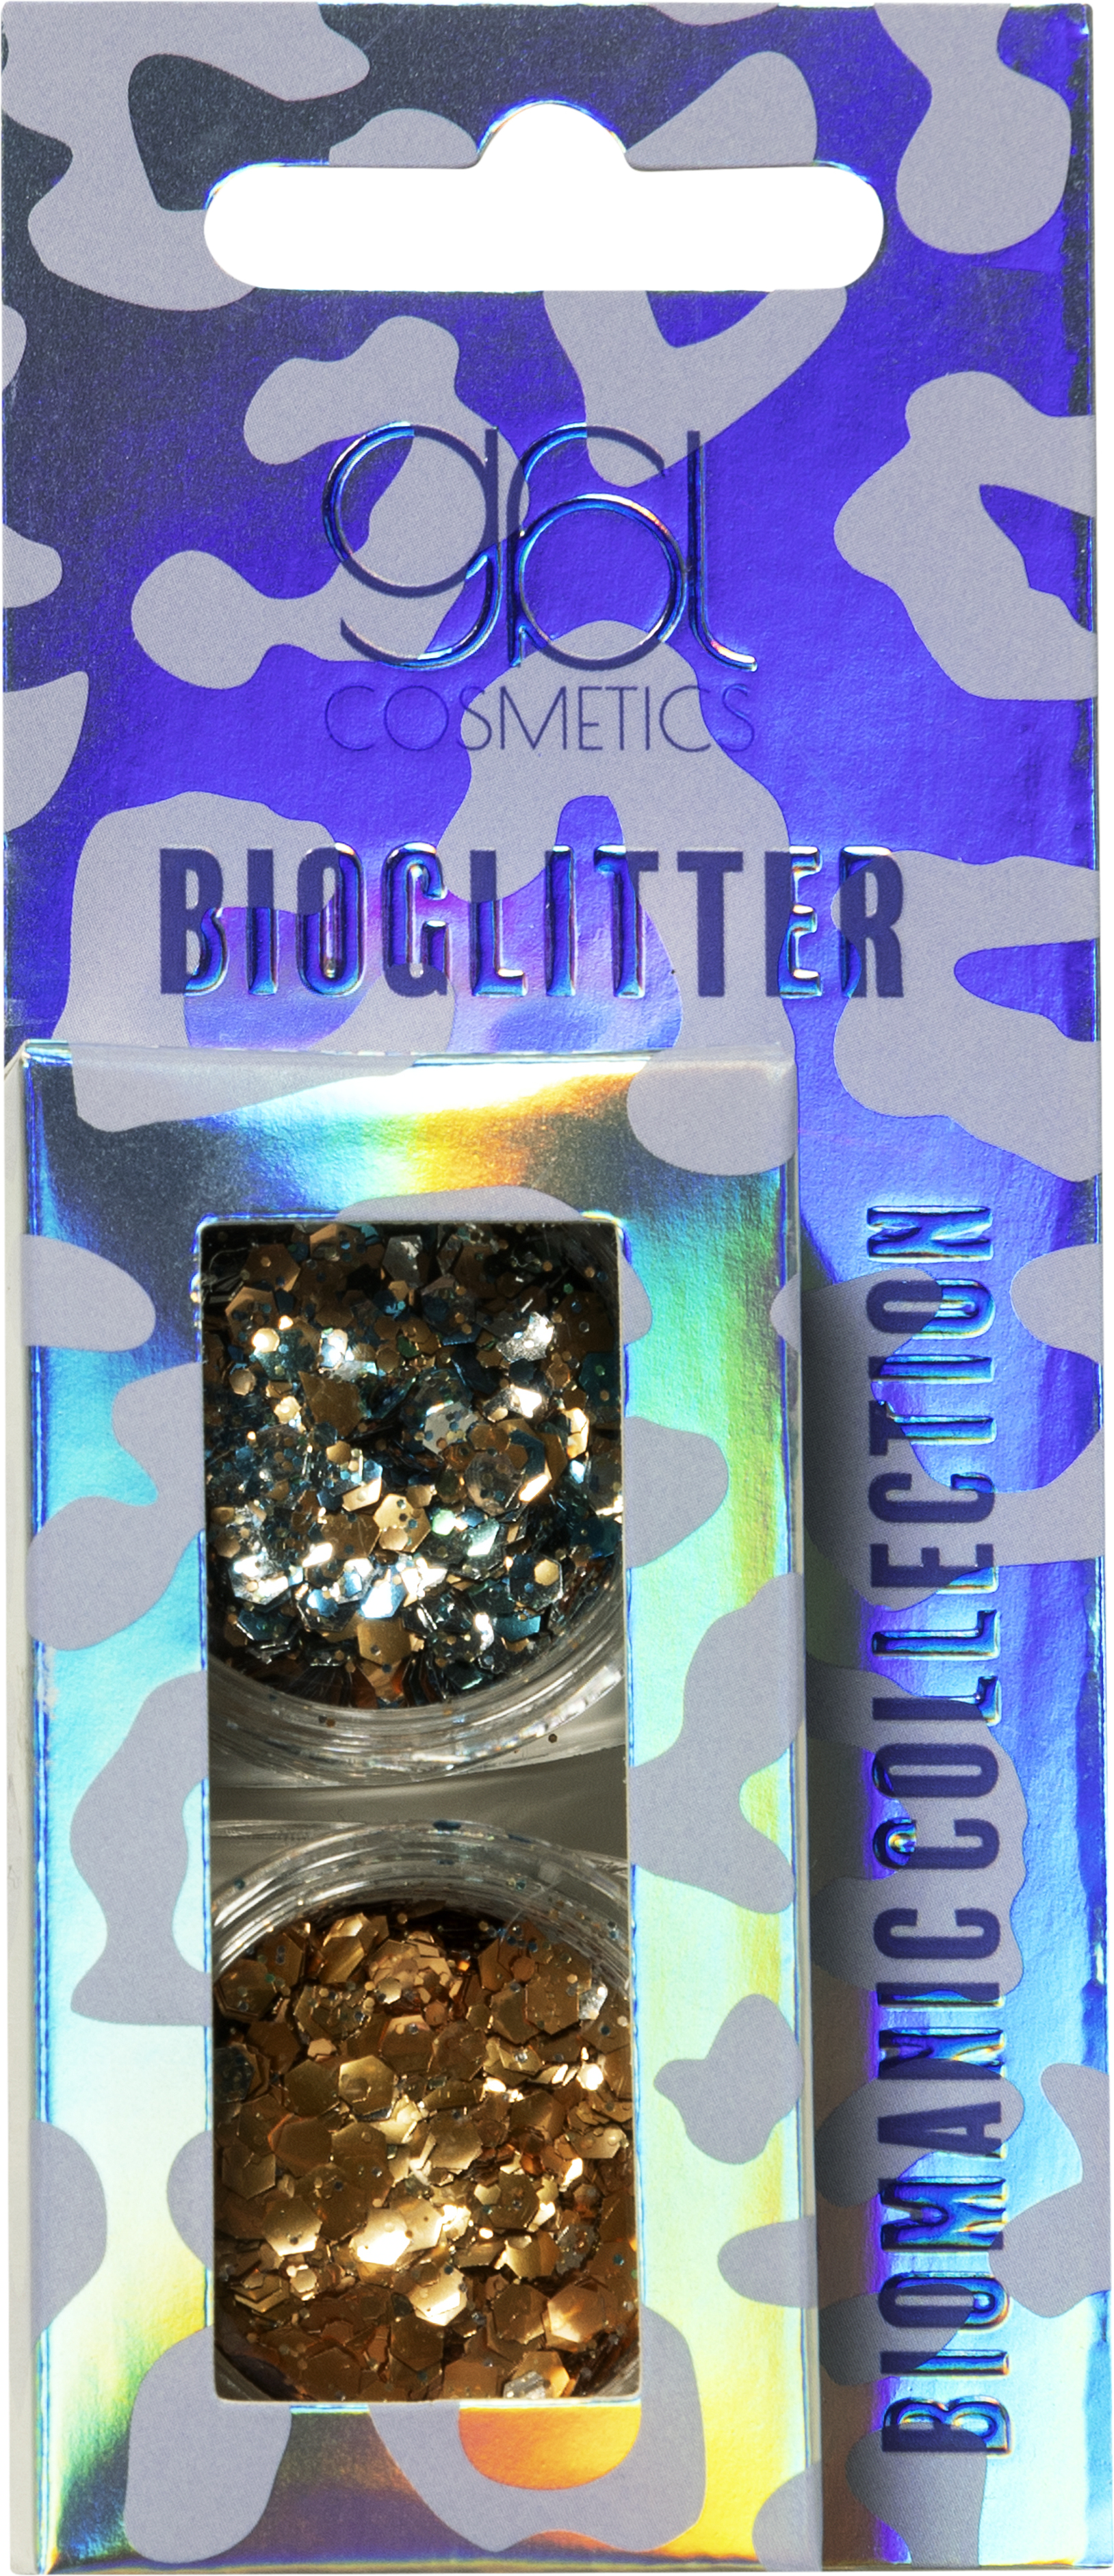 gbl Cosmetics Biomanic Collection Bioglitter 2 jars Lunar